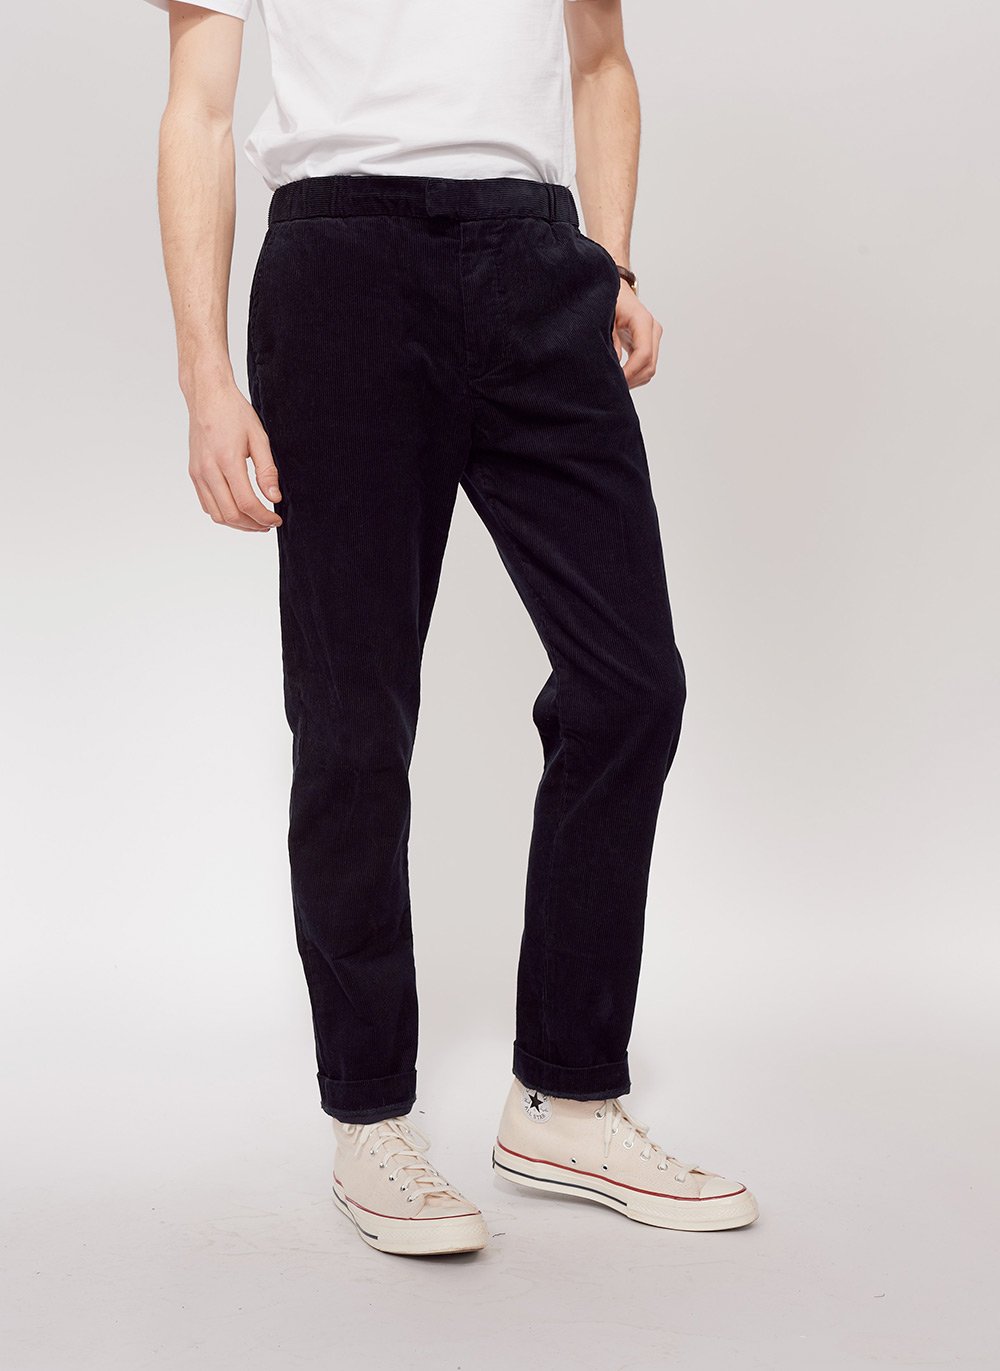 Buy MARK LEUTE Corduroy Trouser for Men. (30, Black) at Amazon.in